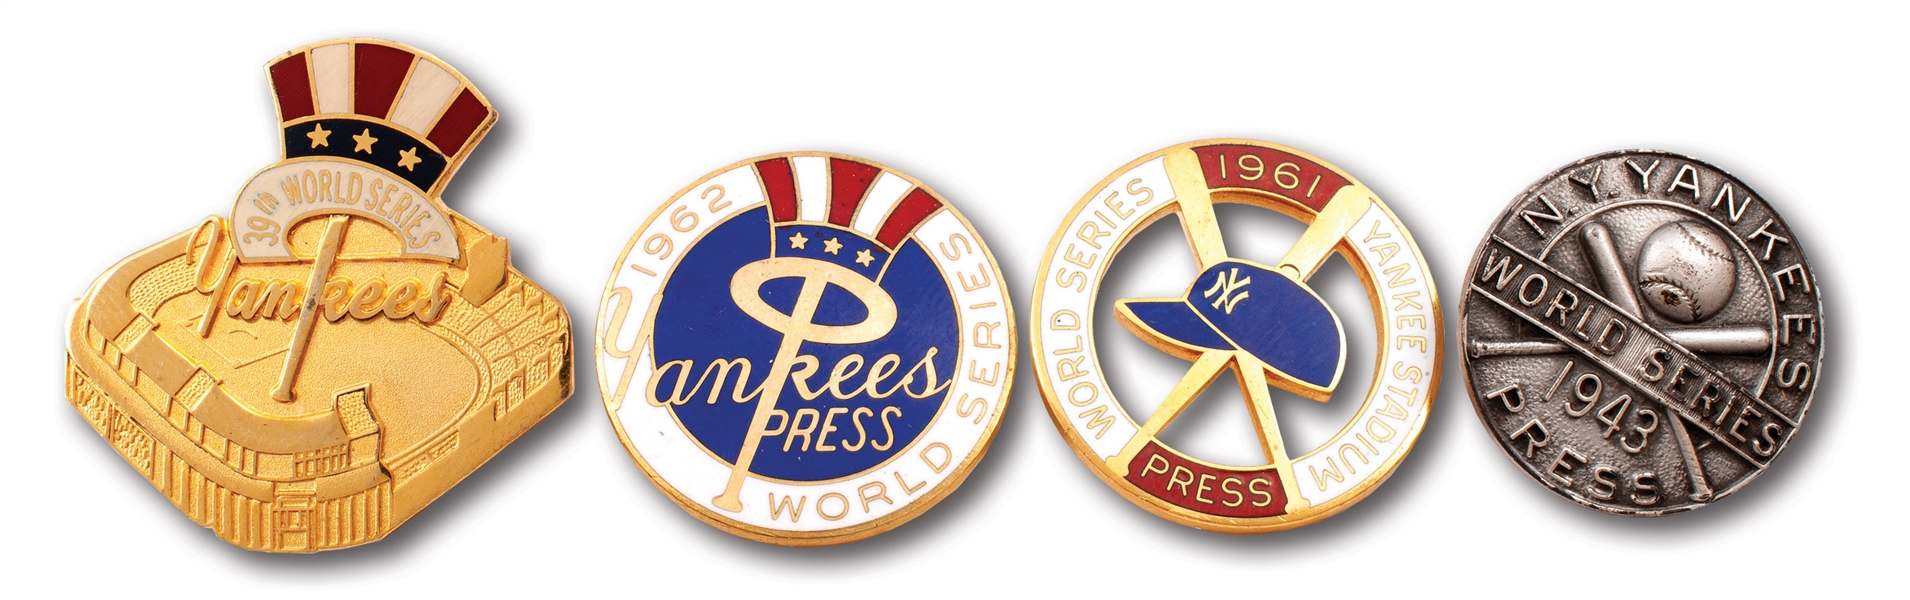 1943, 1961, 1962 & 2003 NEW YORK YANKEES WORLD SERIES PRESS PINS LOT OF (4)